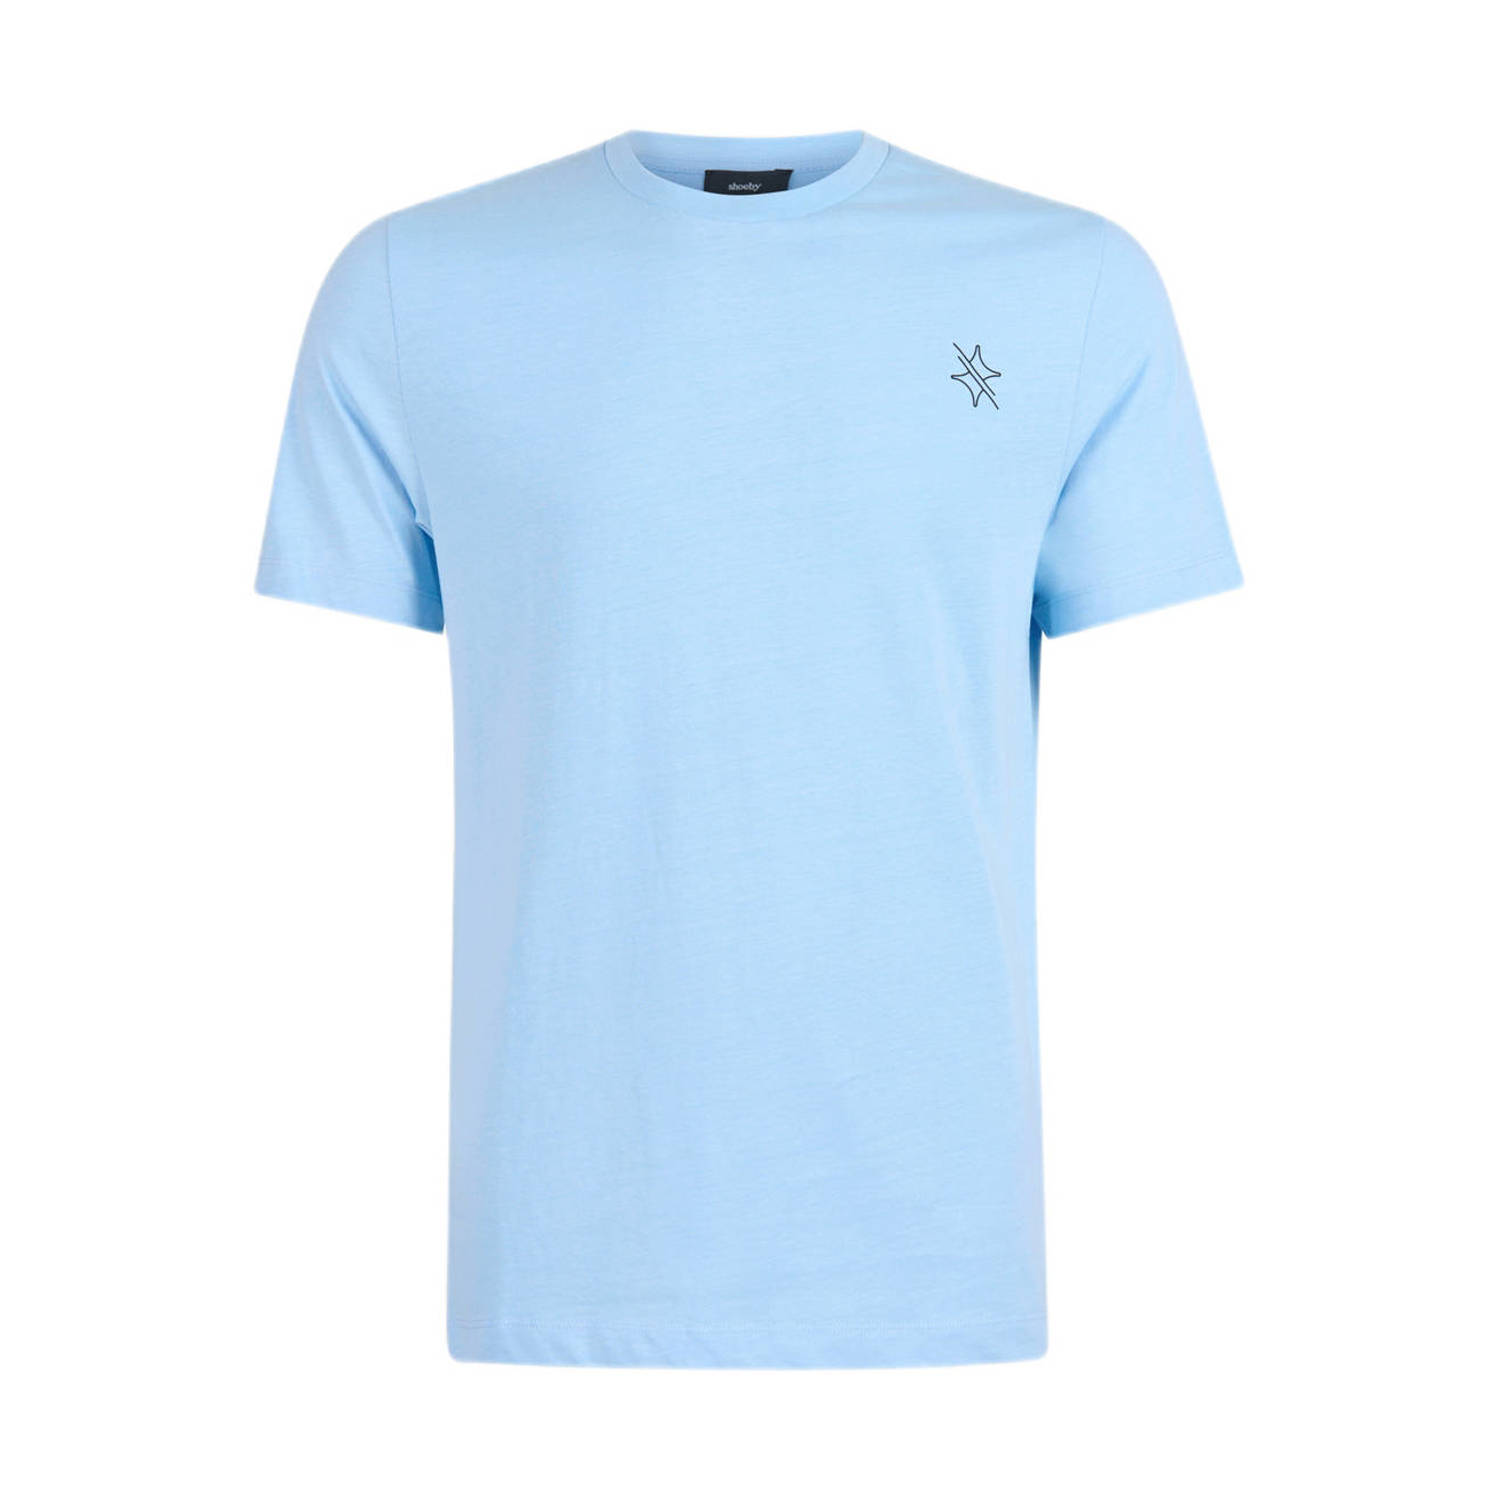 Shoeby T-shirt met printopdruk lichtblauw